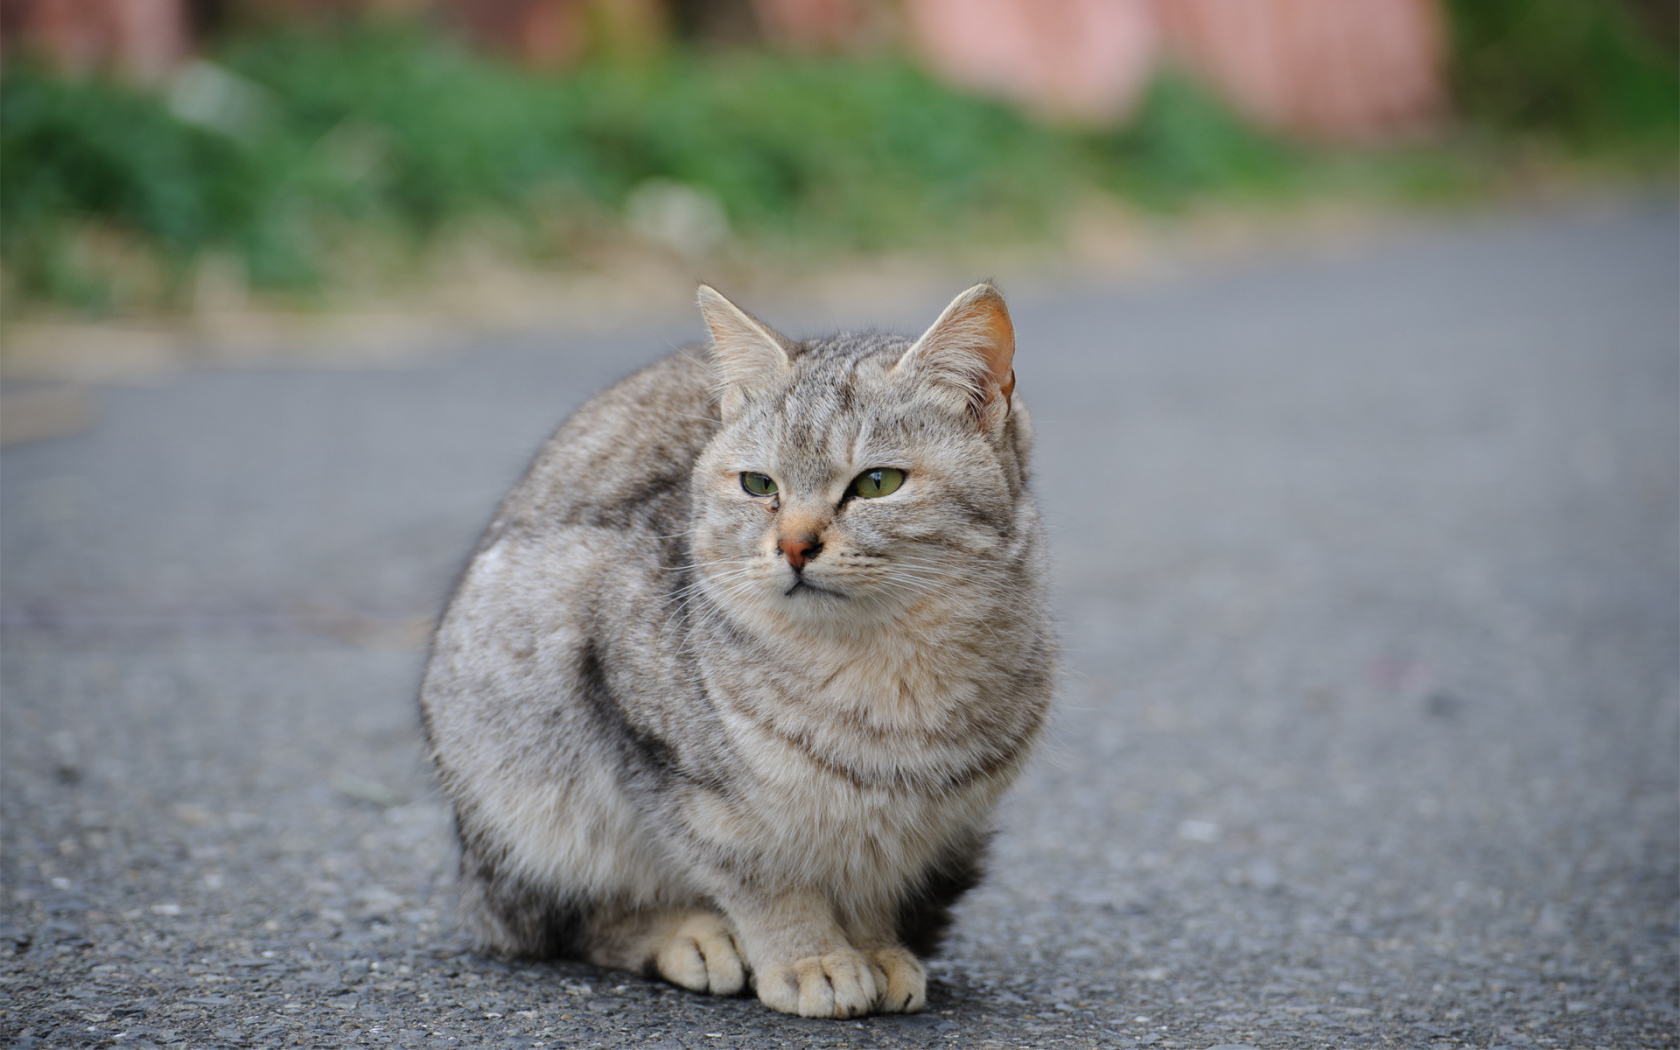 Sad street cat